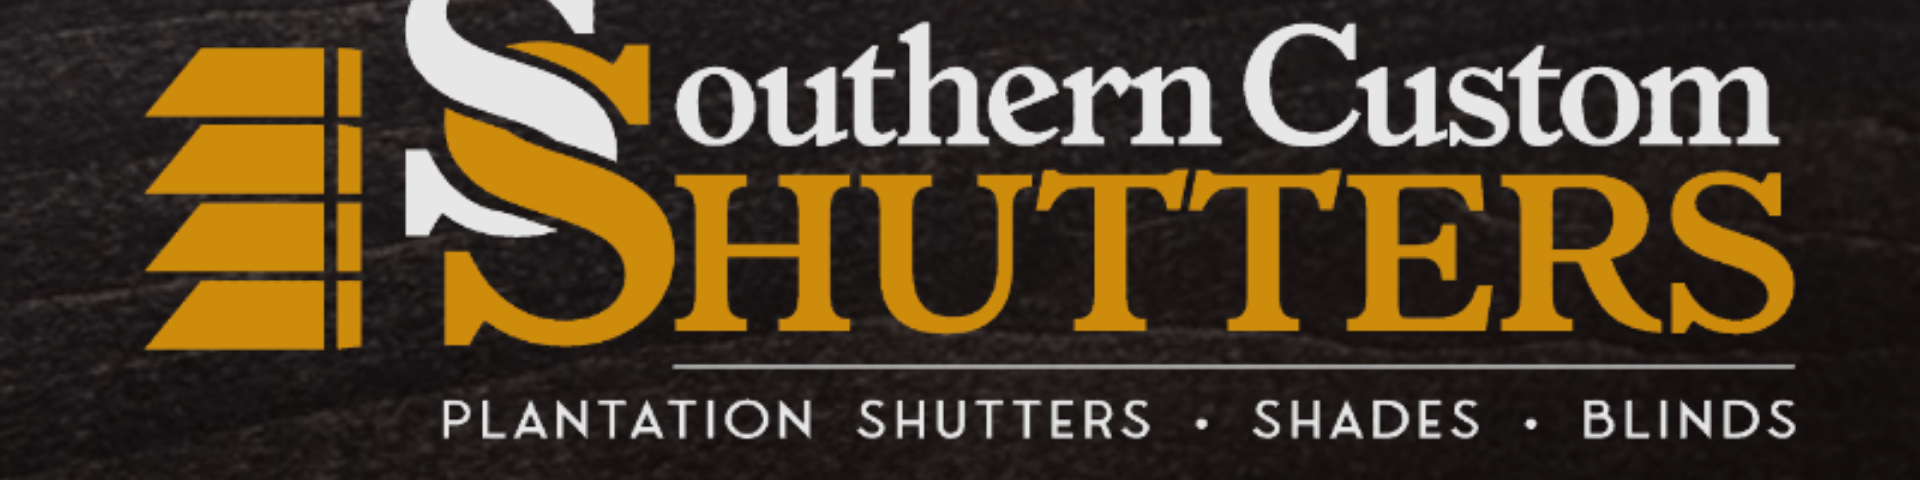 Southern Custom Shutters of Lake Norman Logo